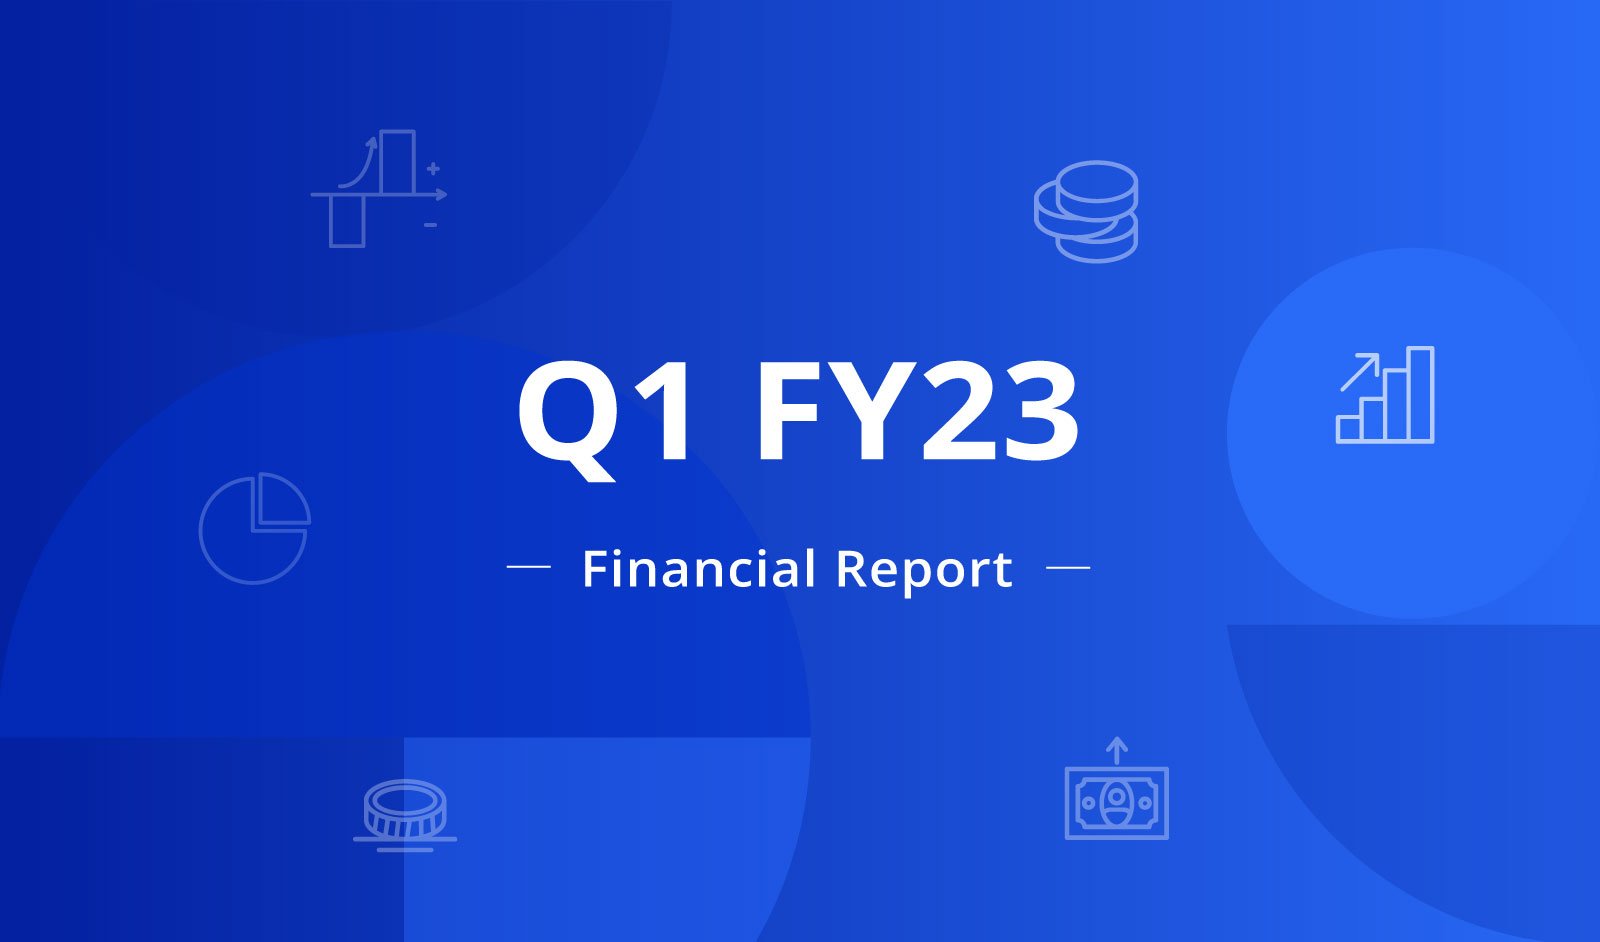 PR_Q1FY23 Financial report_Banner_p01_v01